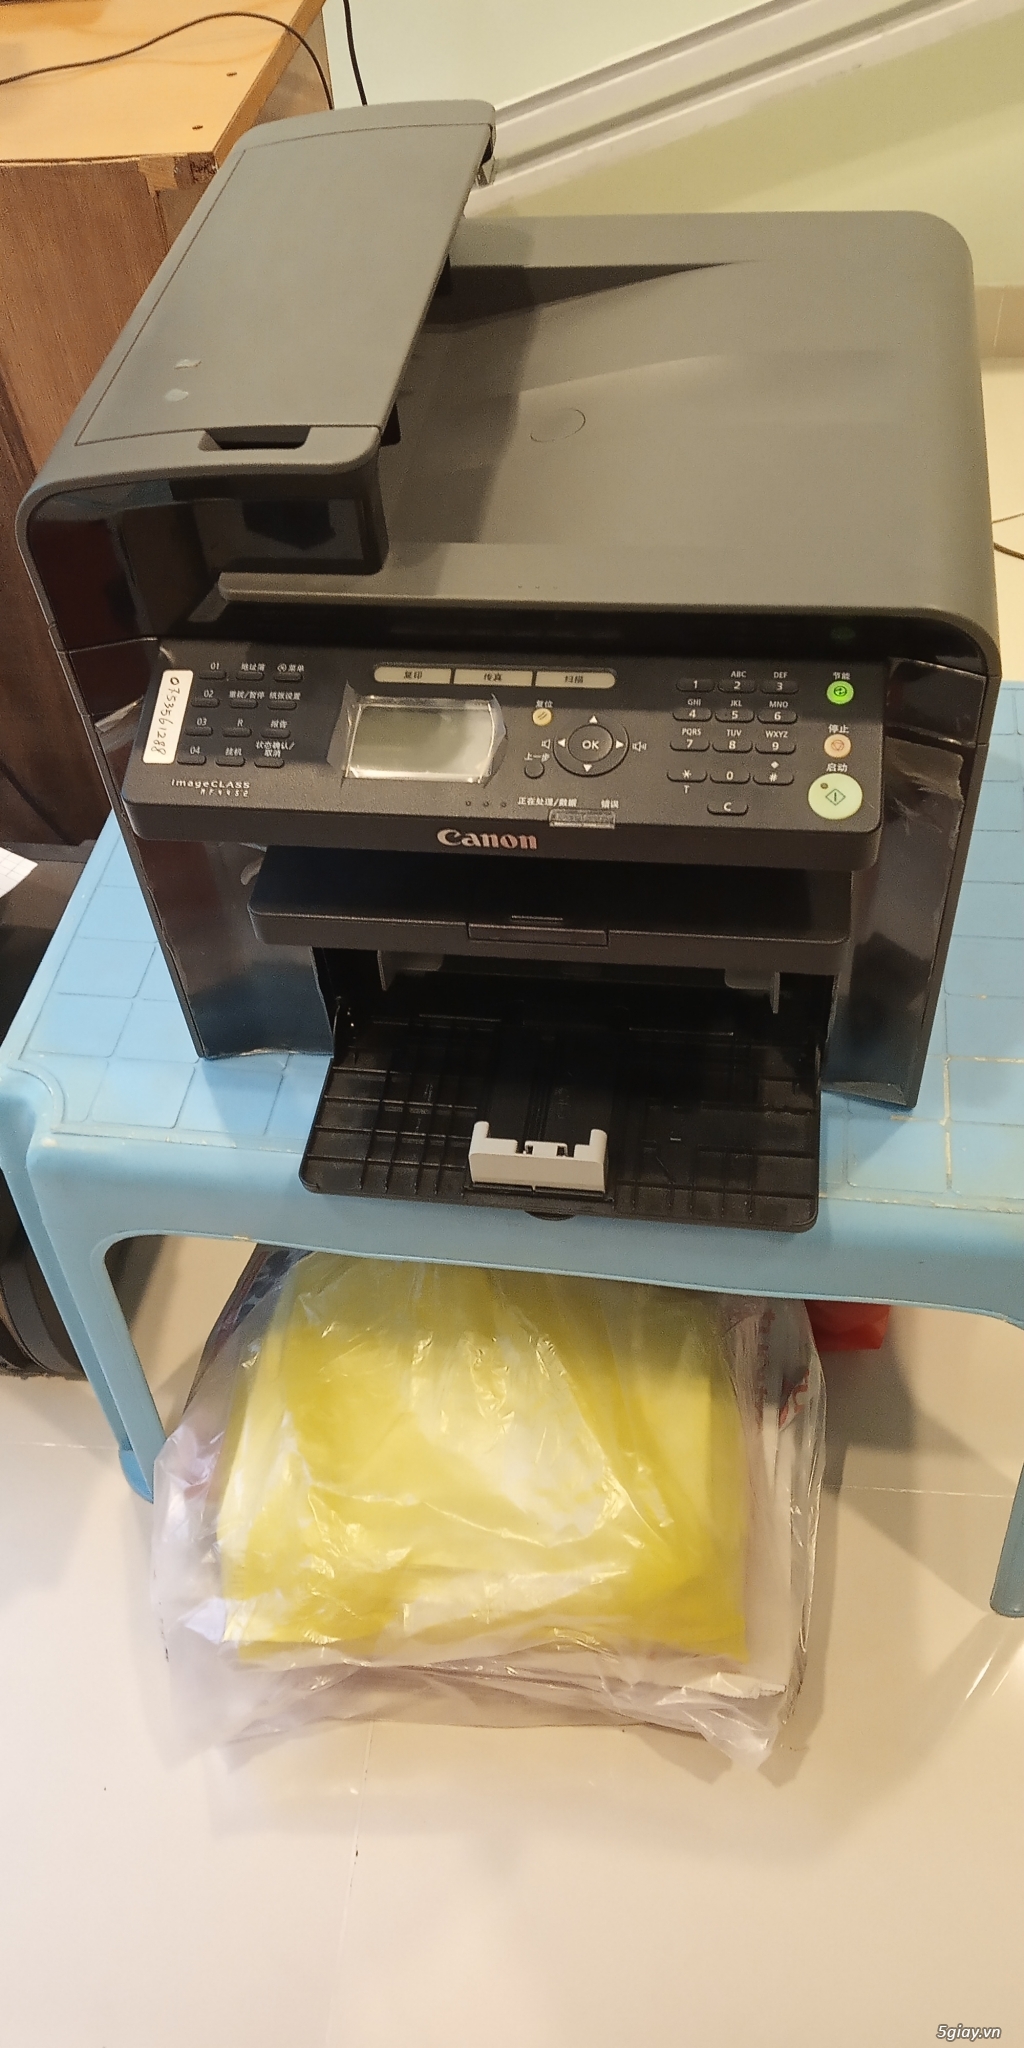 Cần bán 1 máy in CANON 4452 đa chức năng, Coppy, Scan, Fax, In, - 4